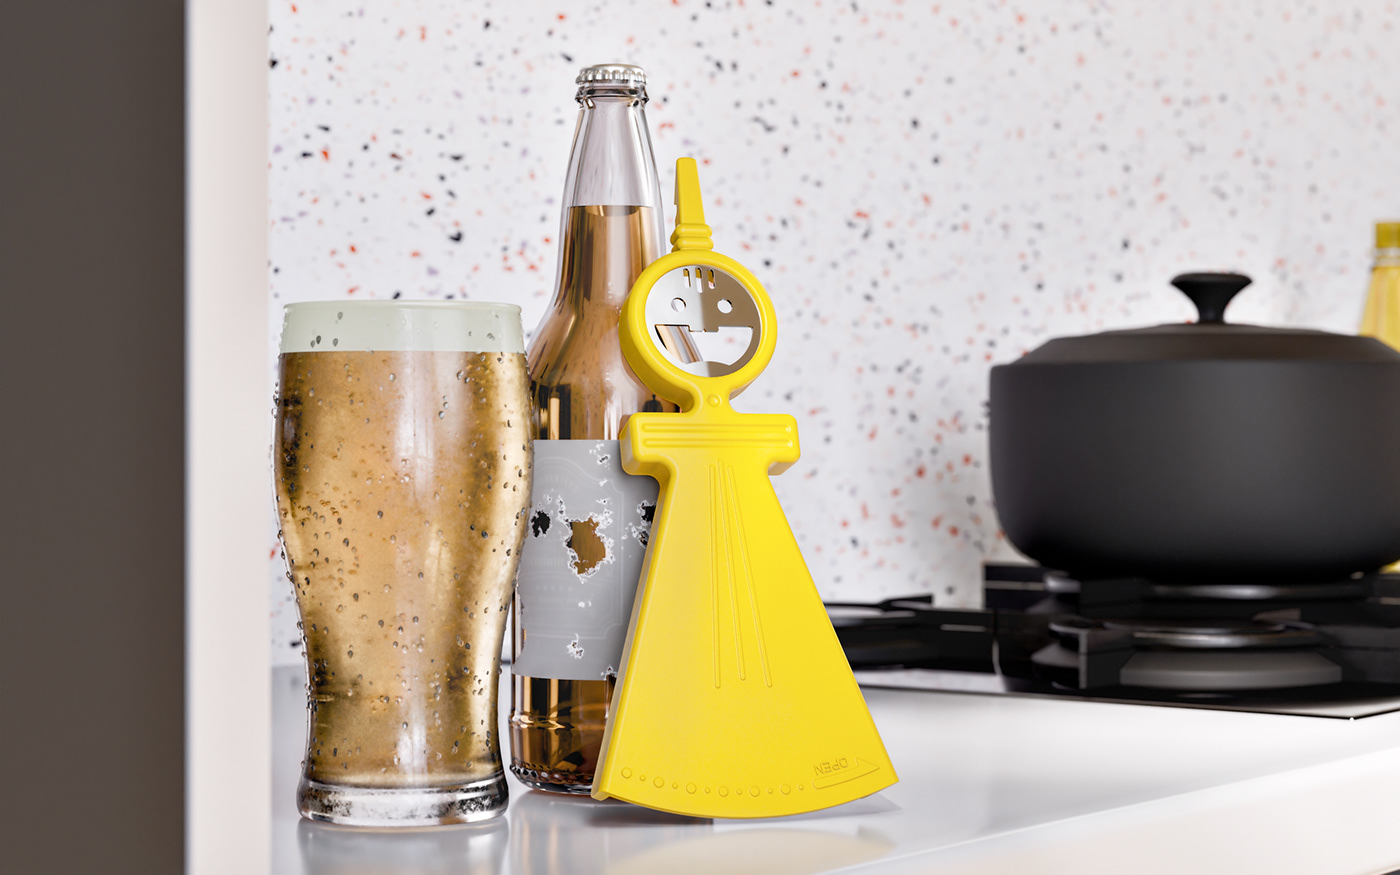 bottle opener kitchen tools girls Character lifestyle product design  3D Render